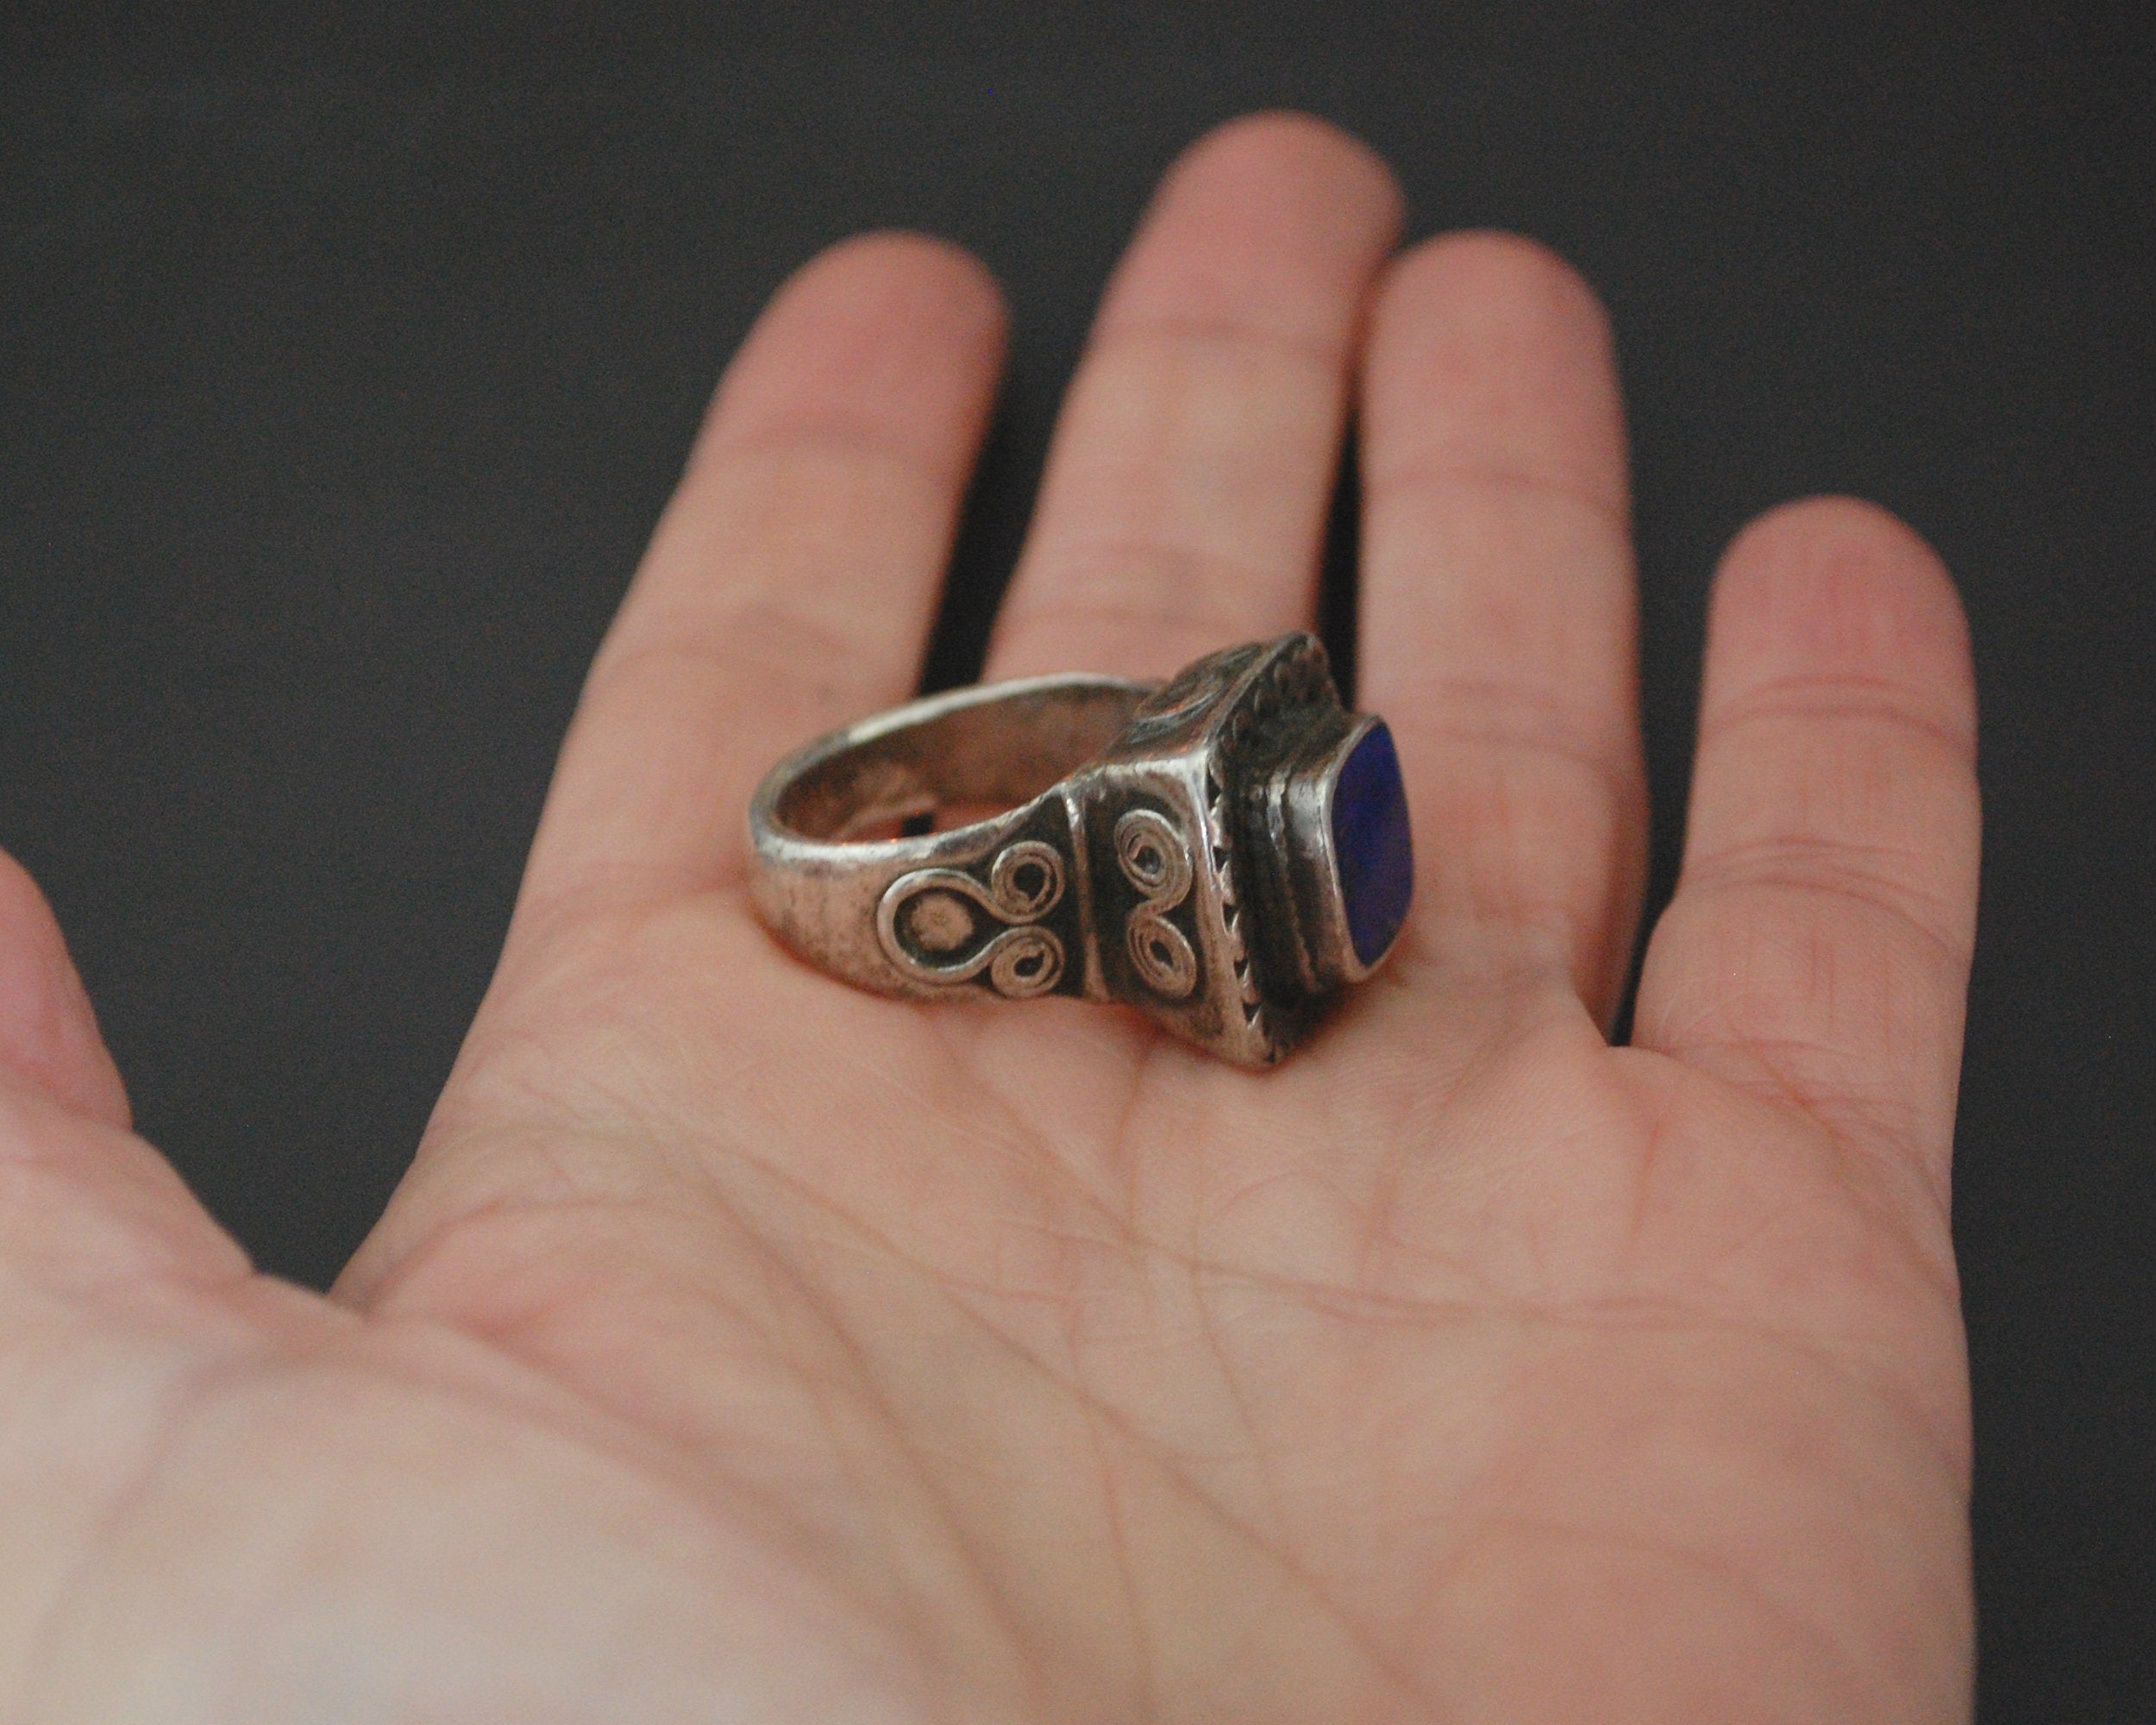 Old Afghani Lapis Lazuli Ring - Size 8.5